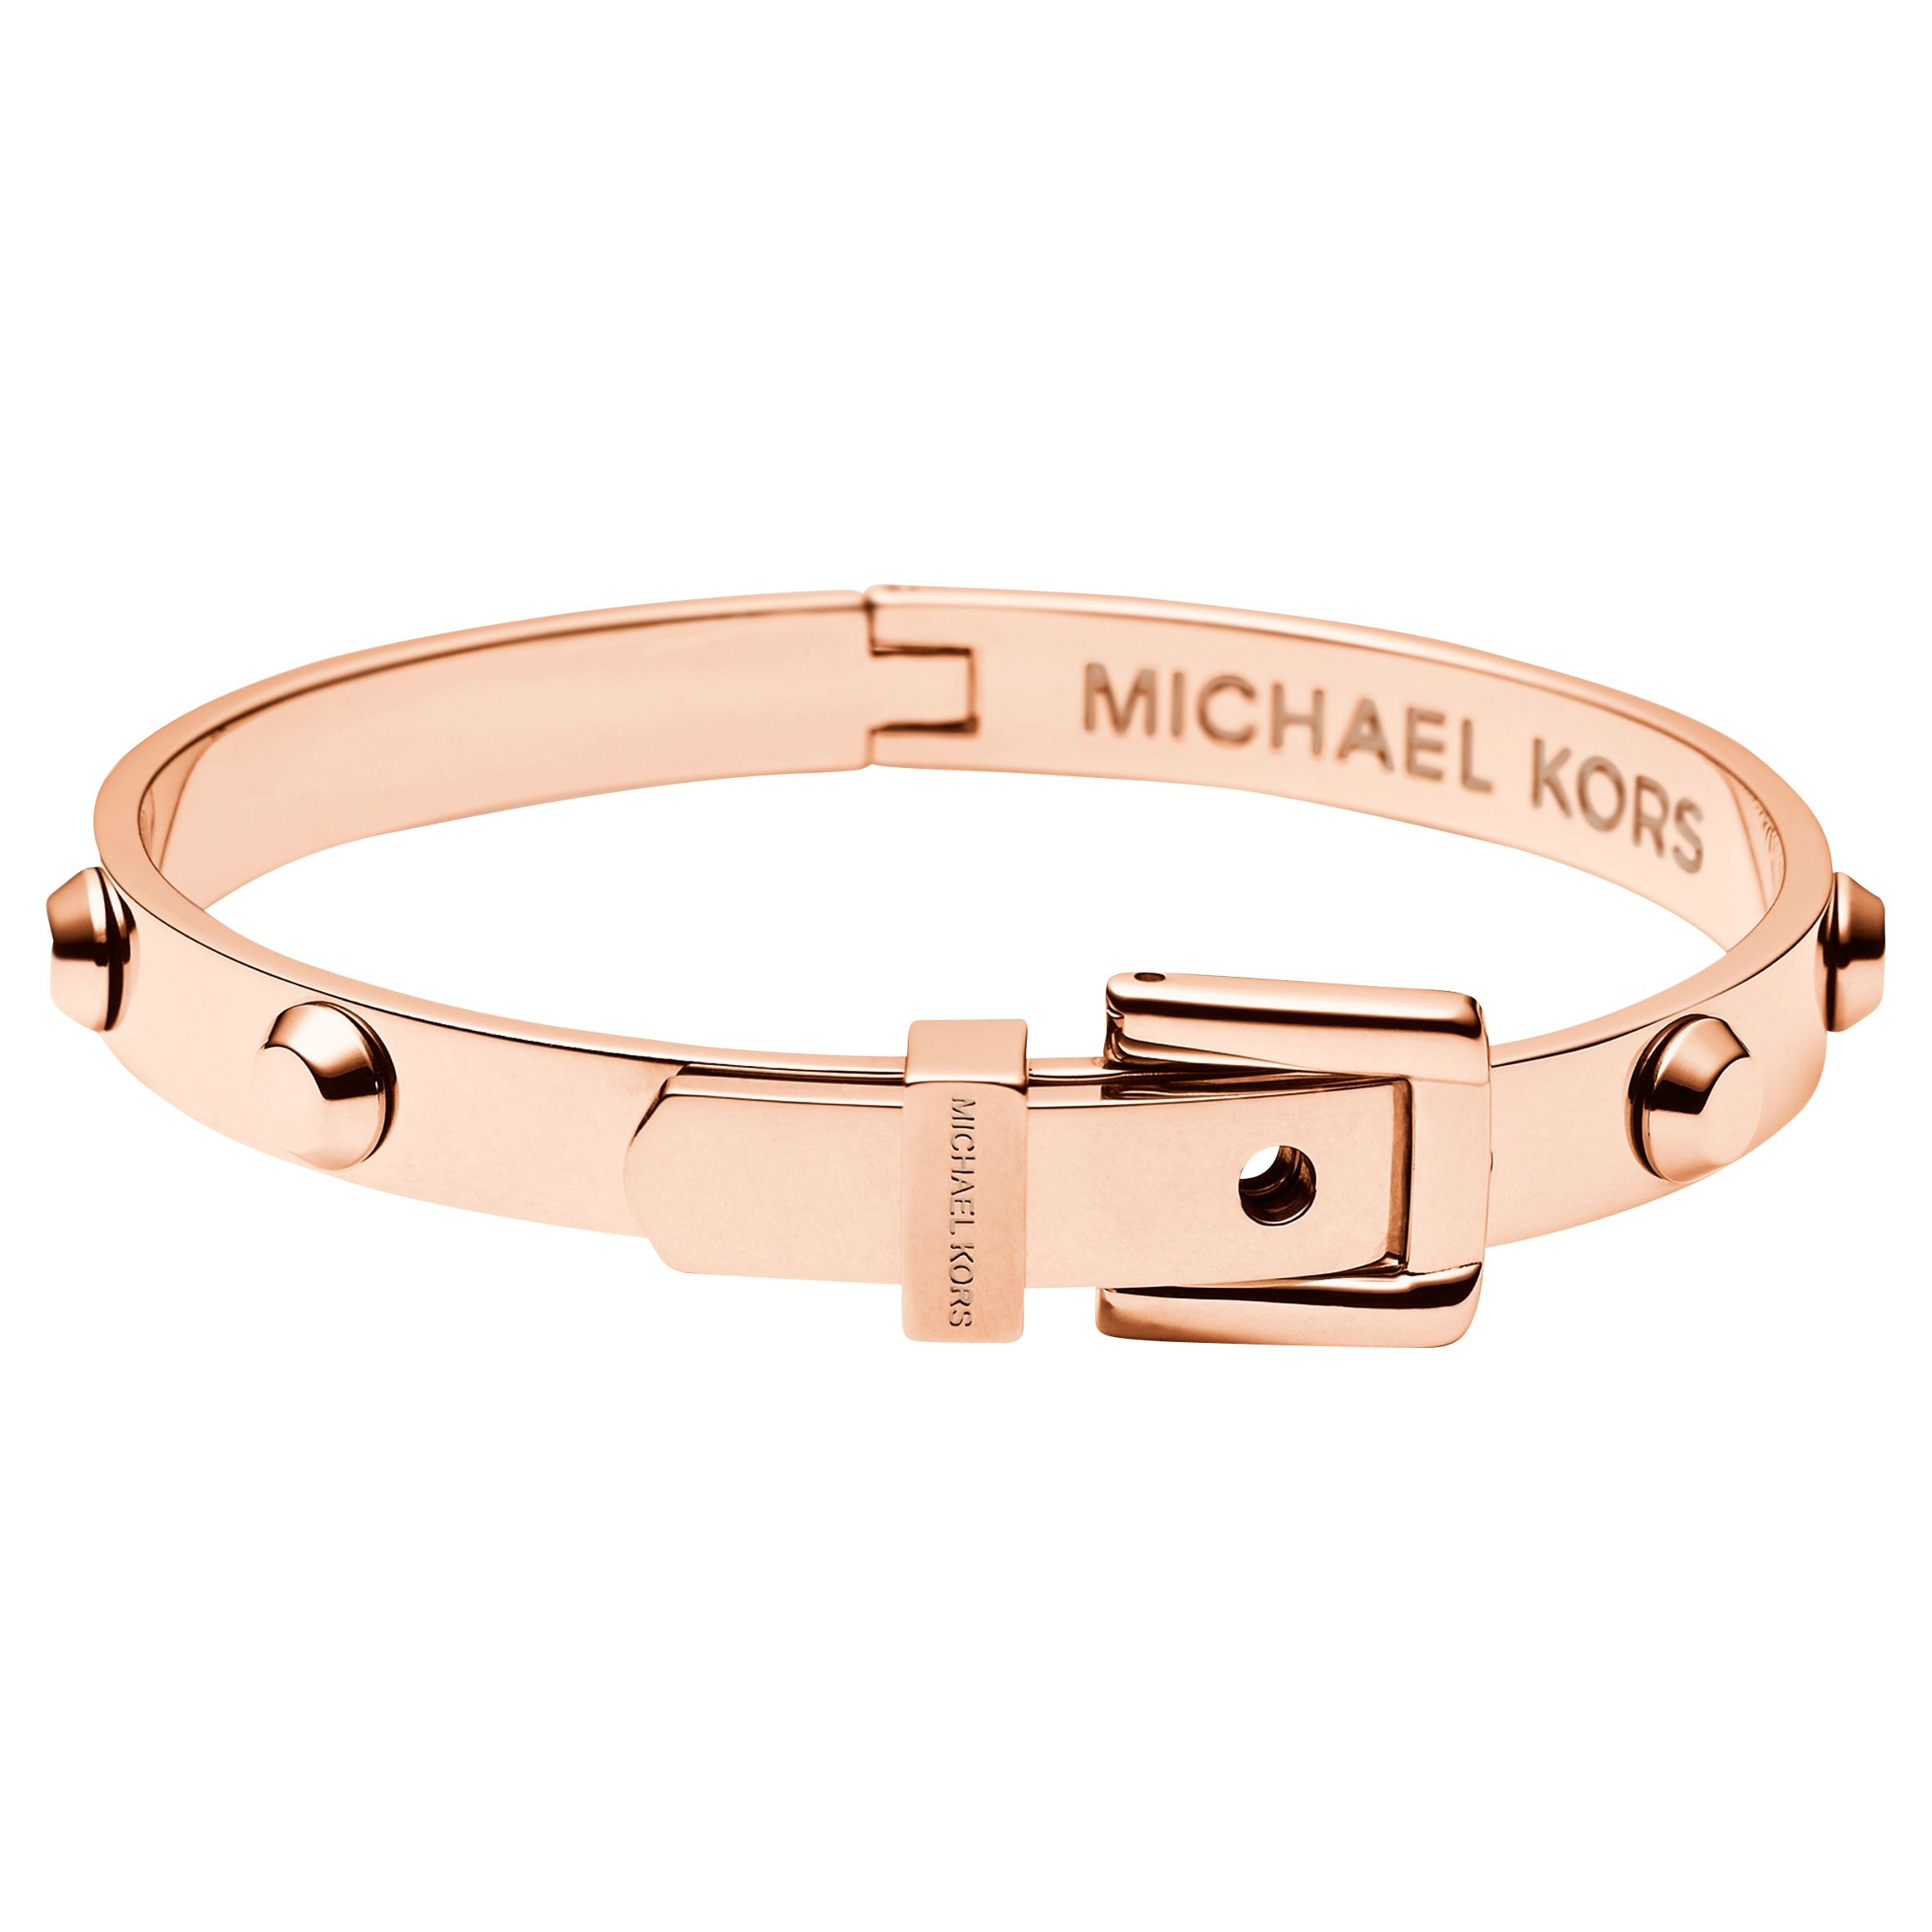 Actualizar 52+ imagen michael kors gold belt bracelet